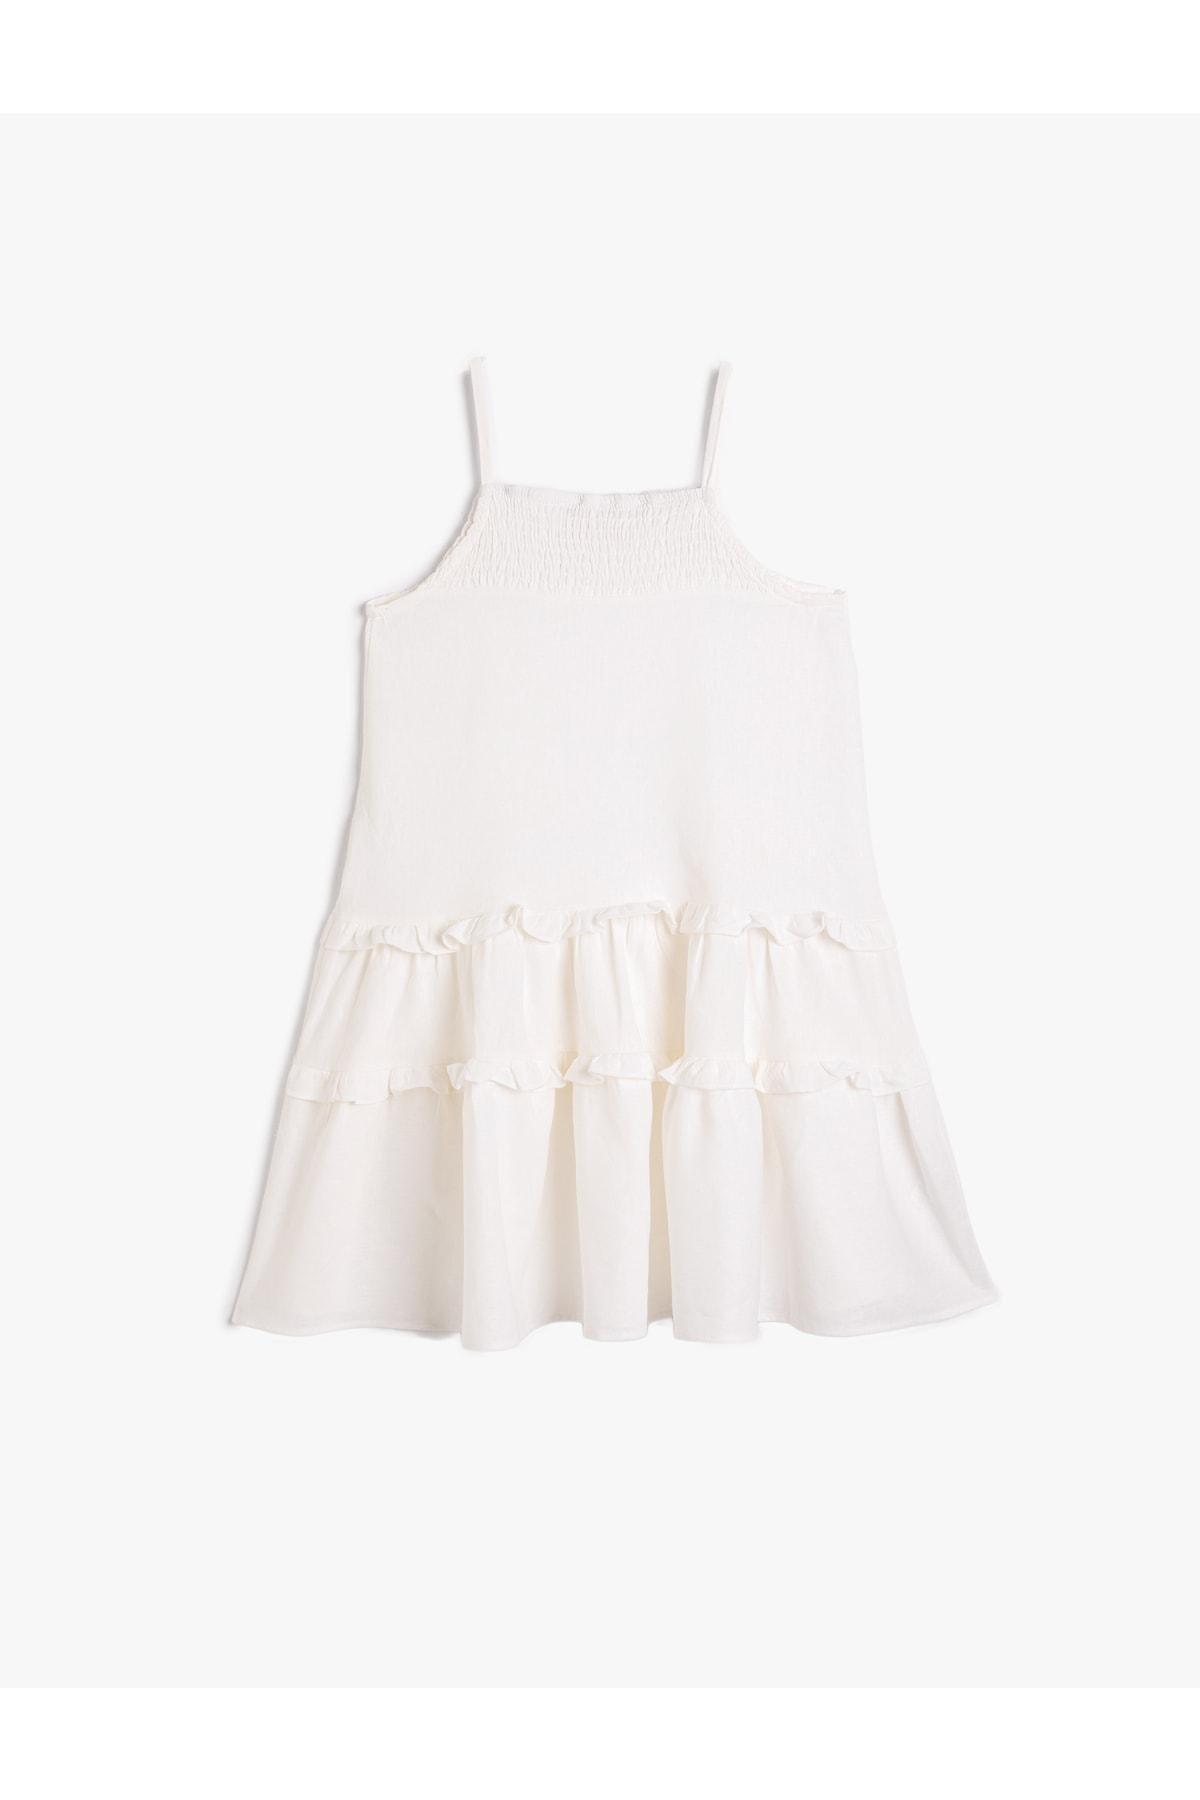 Koton - White Ruffle Dress, Kids Girls